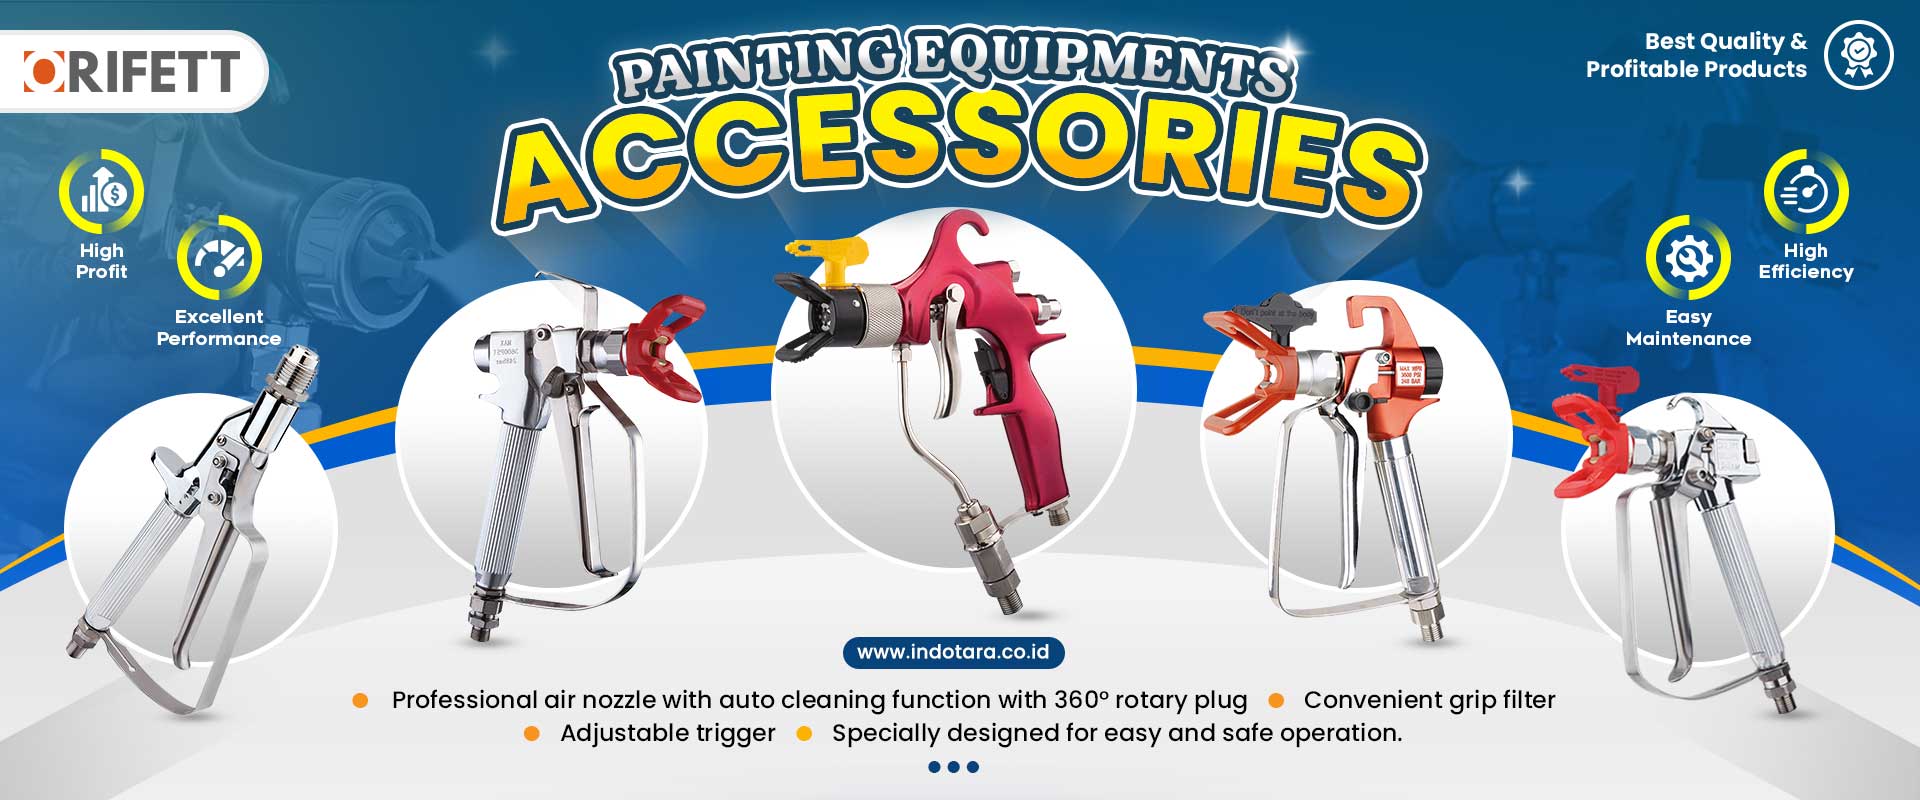 Jual Painting Equipments, Harga Airless Paint Sprayer, Jual Airless Paint Sprayer Berkualitas